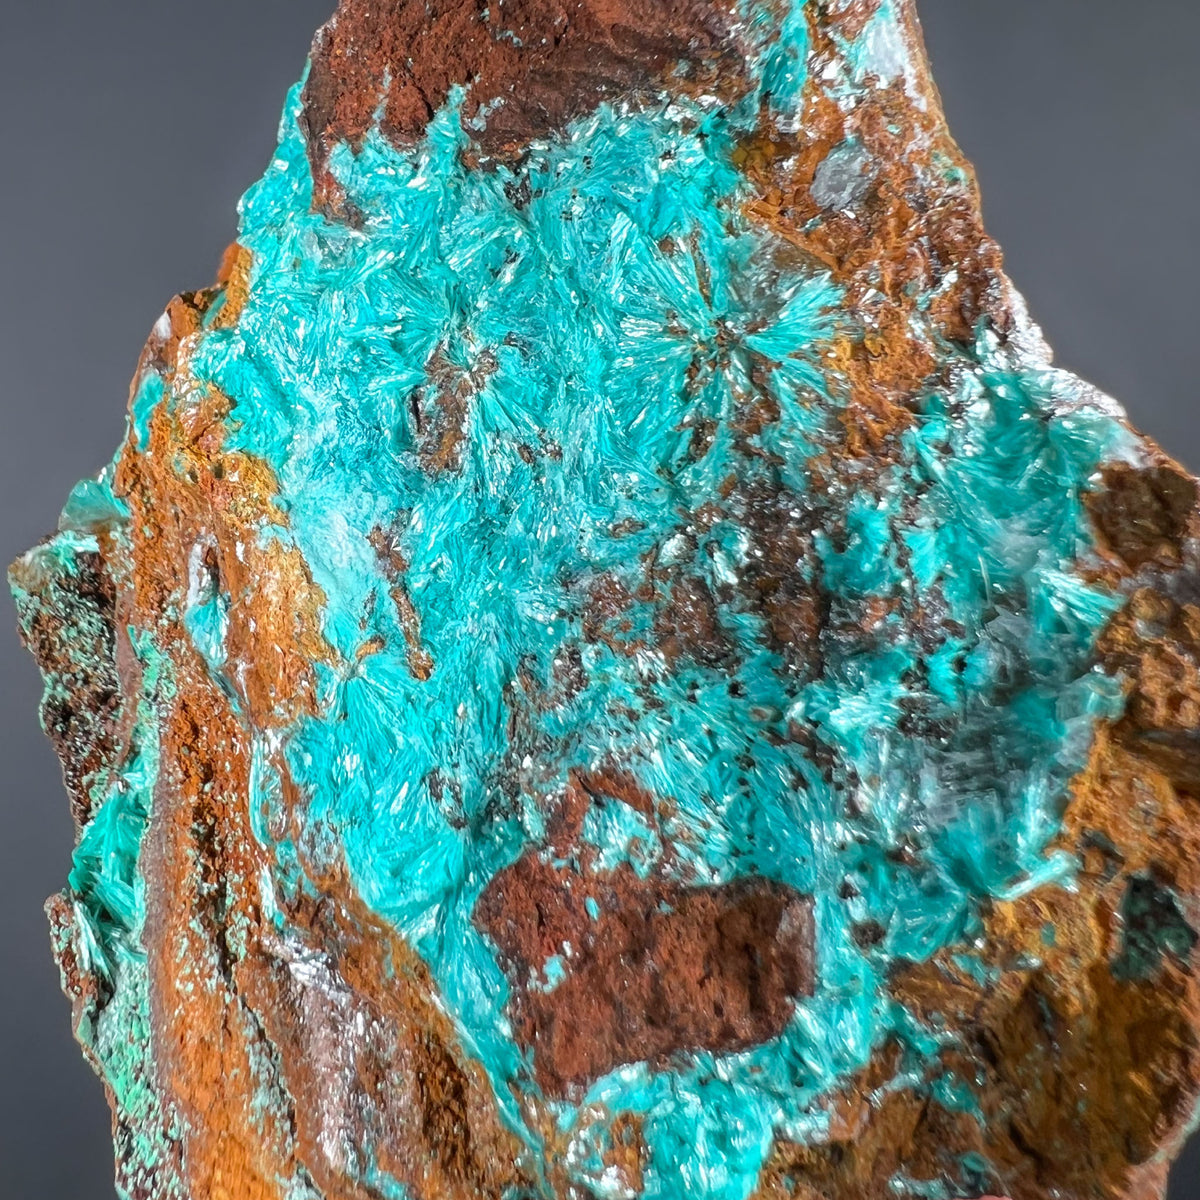 Fibrous teal blue green Aurichalcite Crystals 